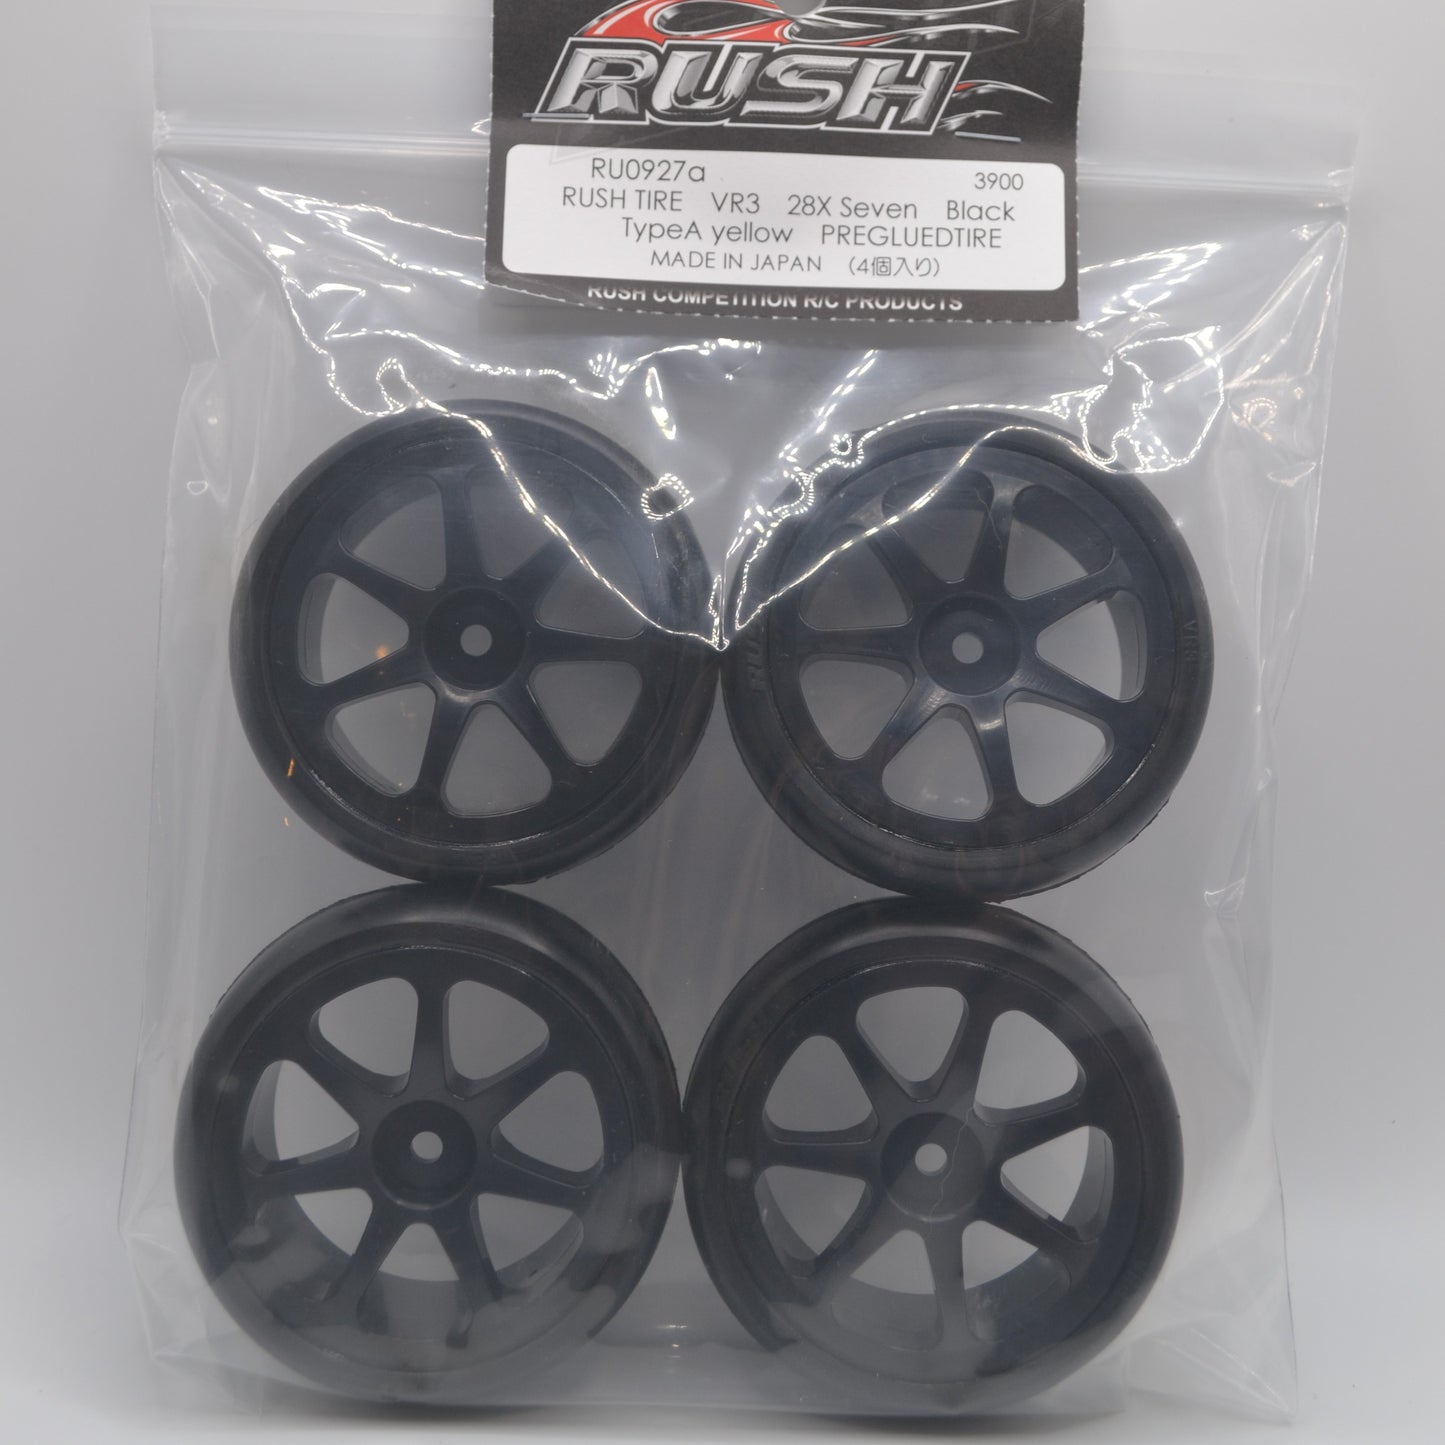 Rush VR3 28X Slick SevenSpoke Black Rim